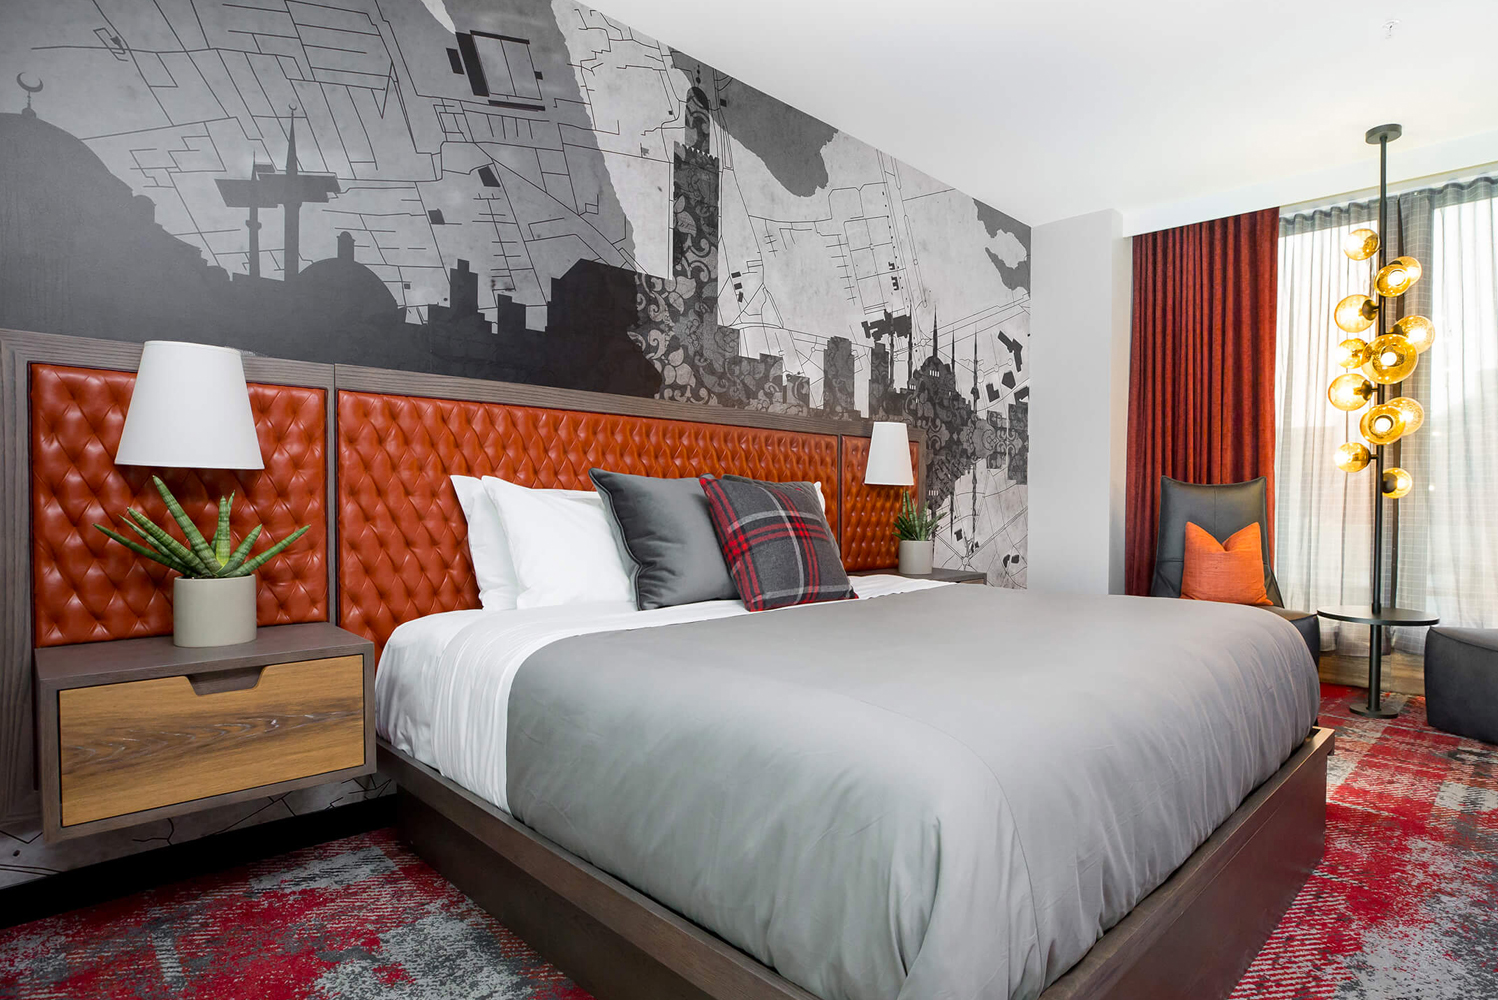 David Mexico Design Group crafts Nashville-inspired Bobby Hotel